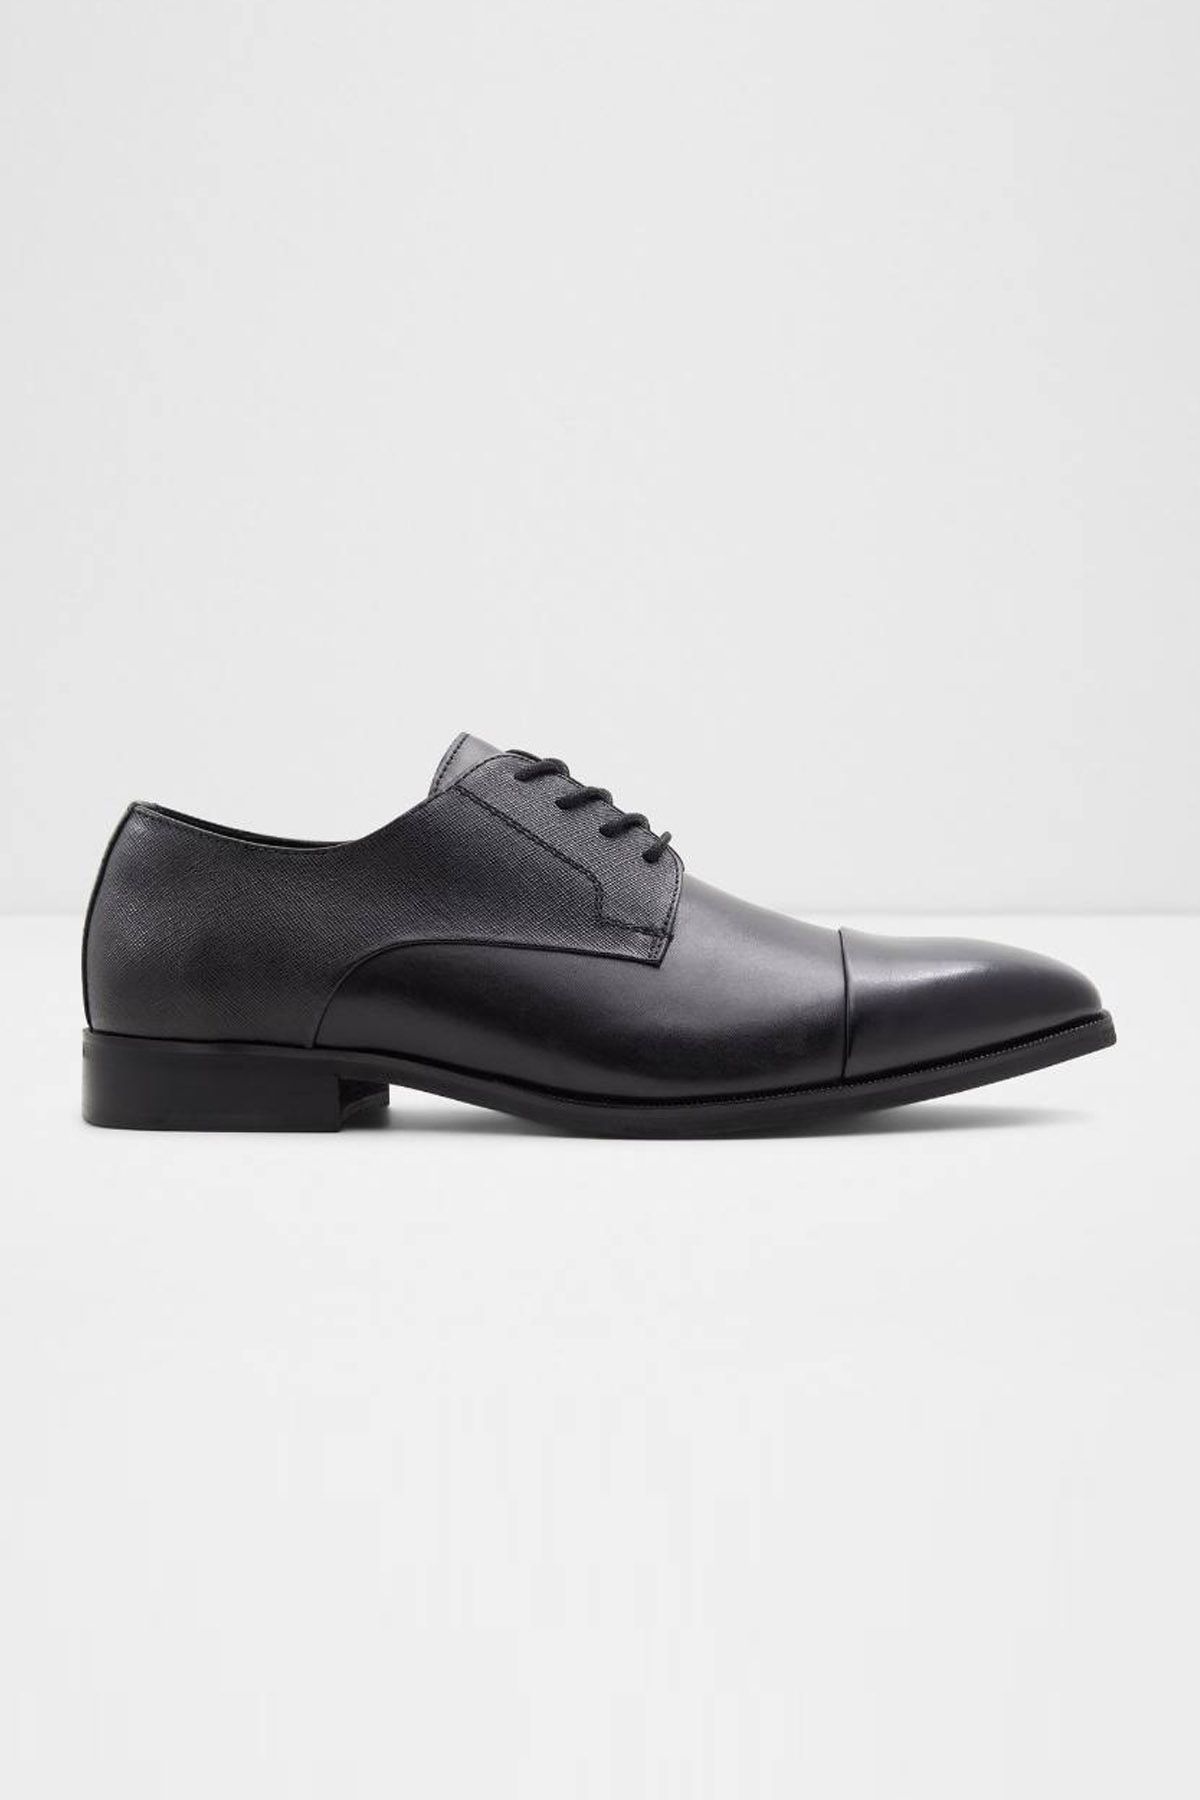 ALDO Rothko Black Men Dress Shoes